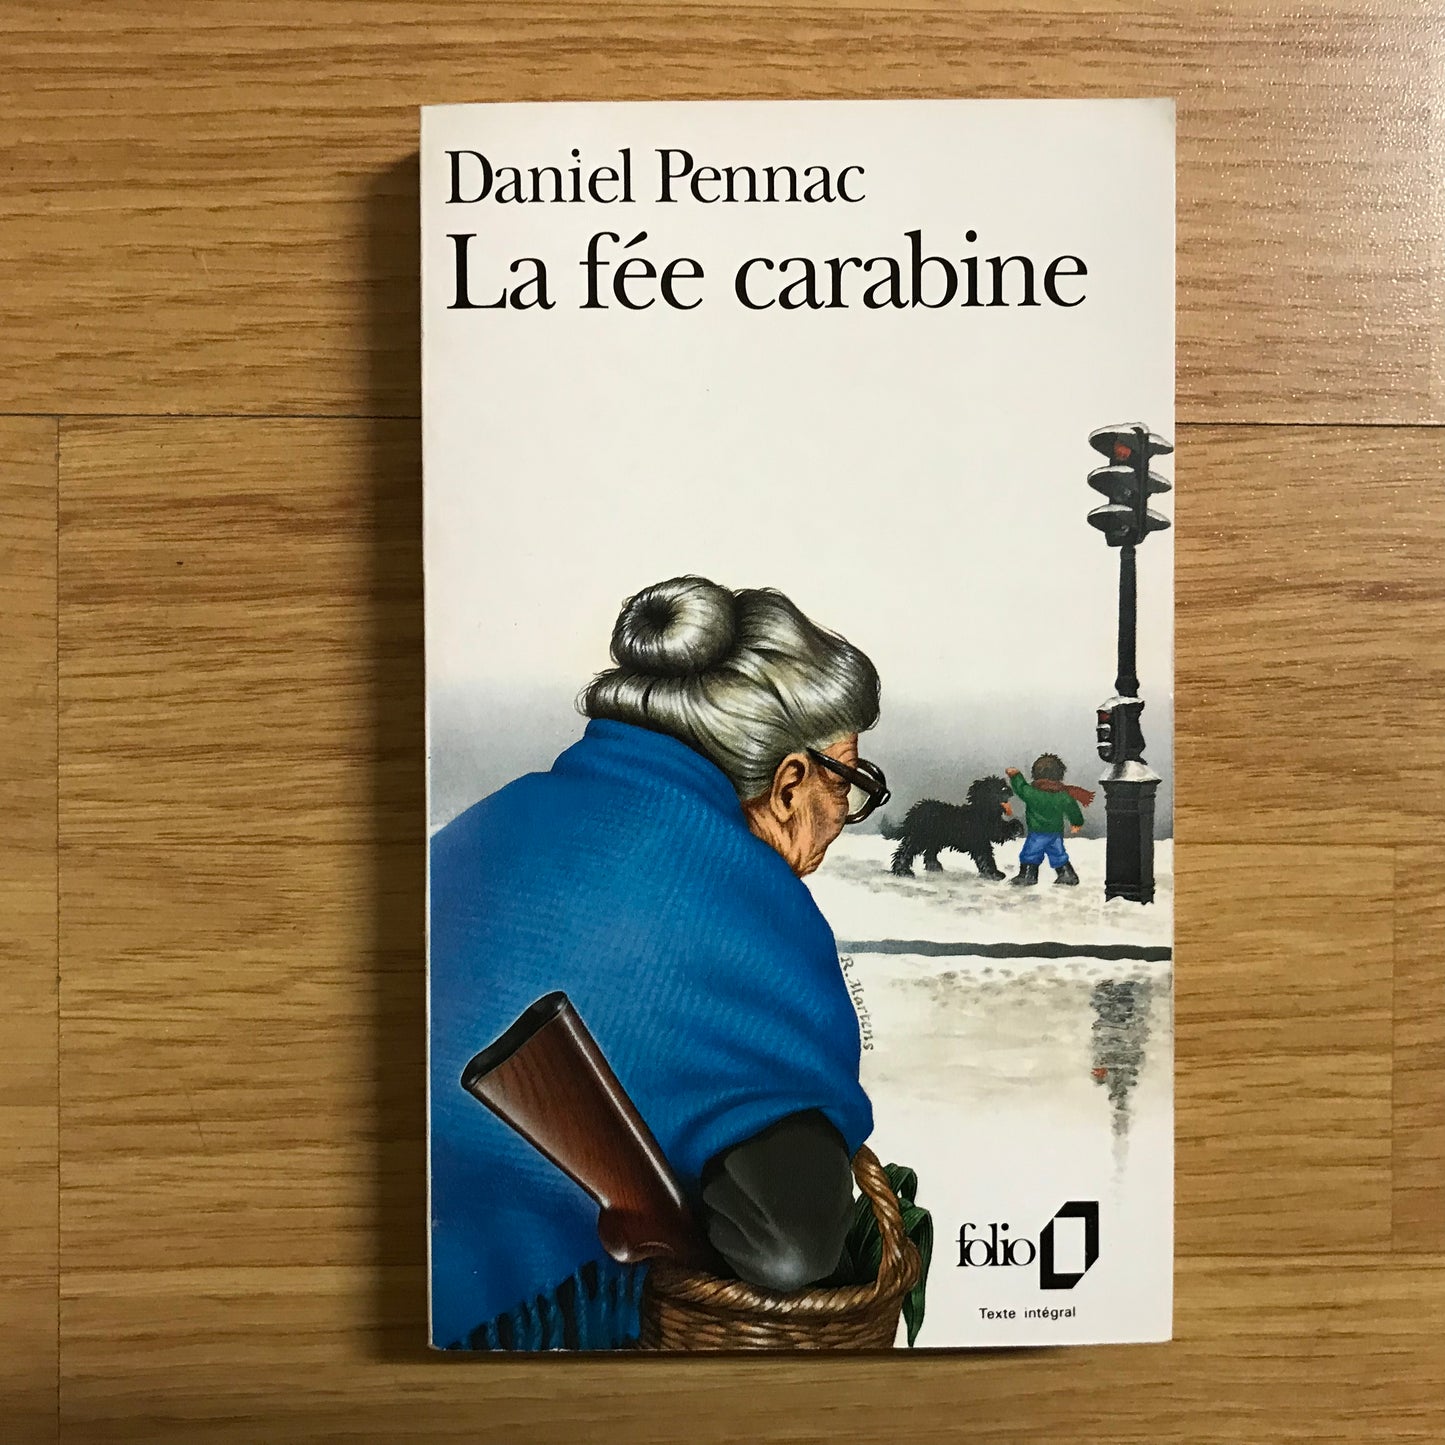 Pennac, Daniel - La fée carabine